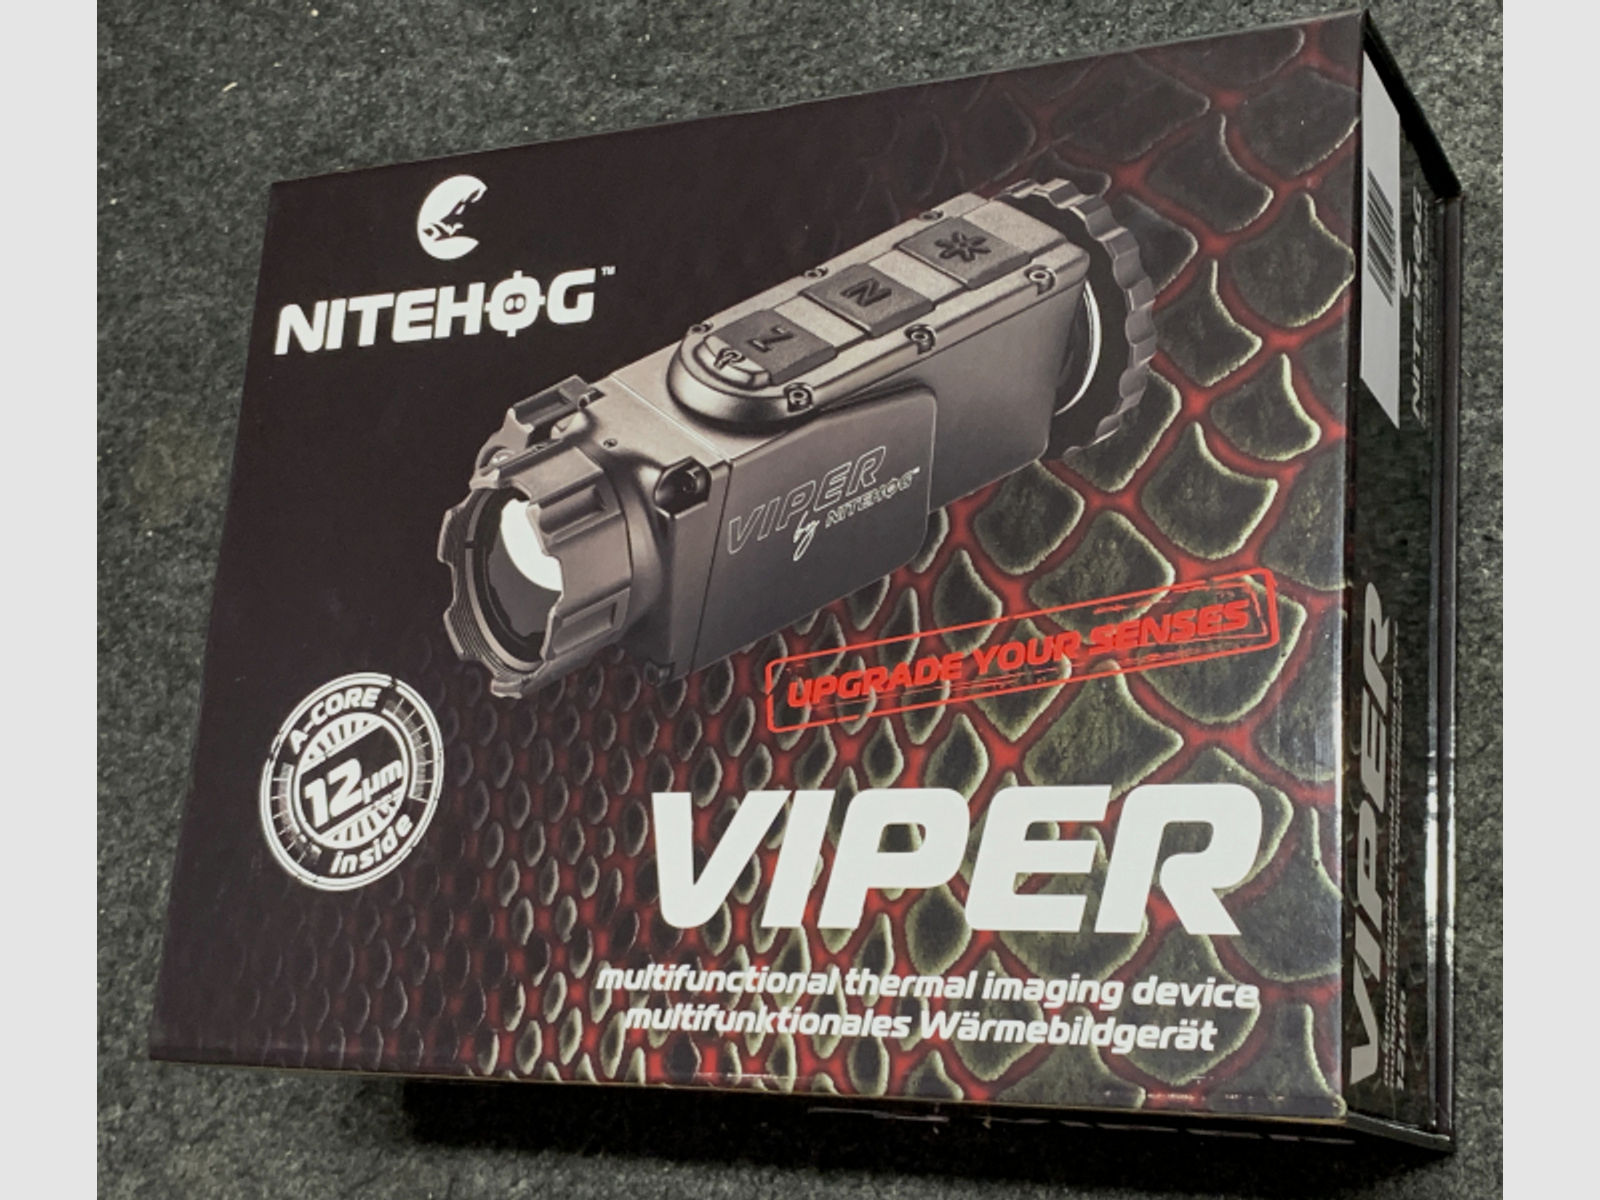 Neuware ---- Nitehog Viper 35 / viper35 / neu orig. verpackt kein hikmicro infiray pulsar